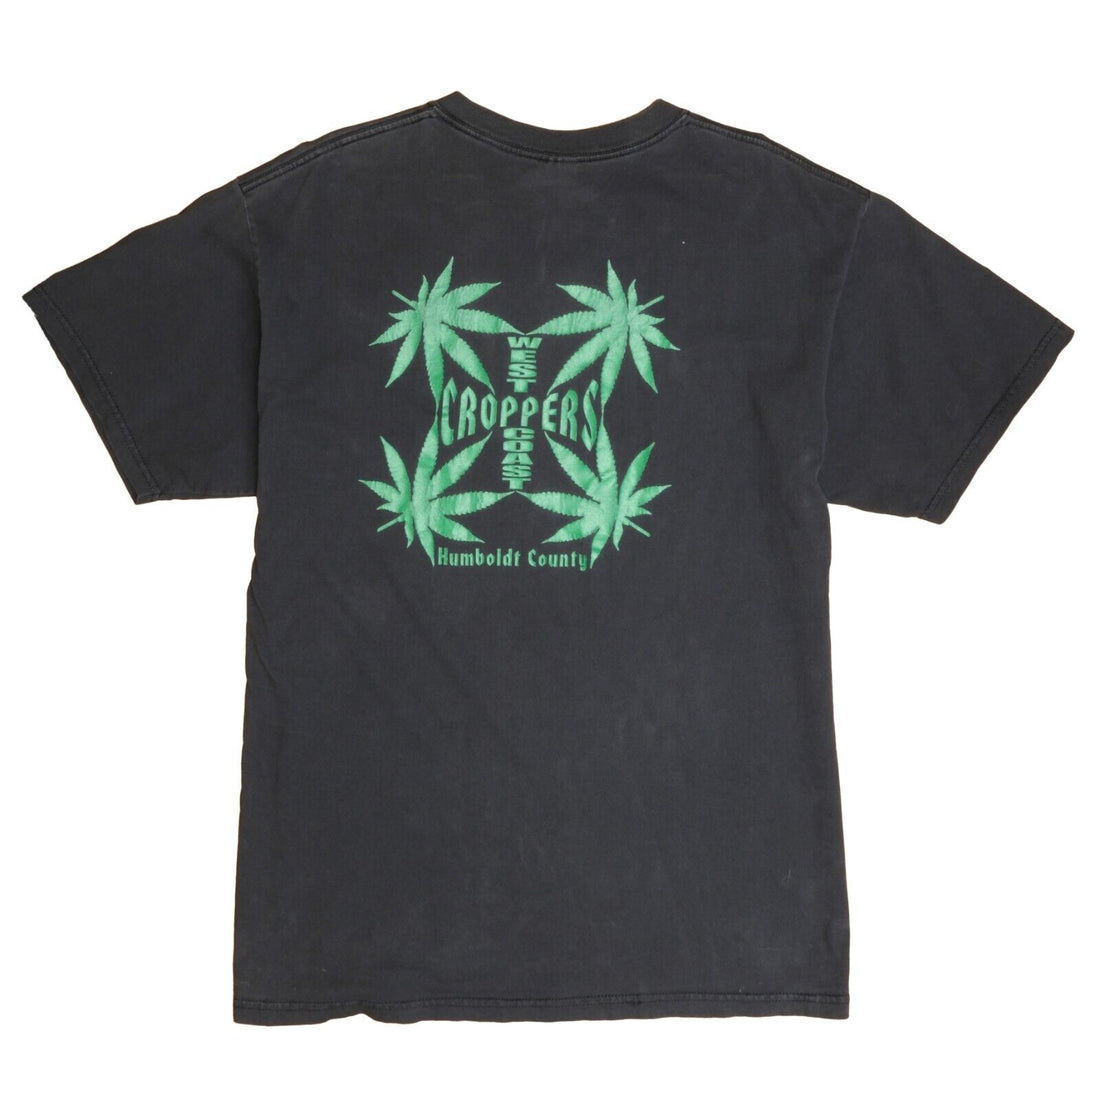 Vintage West Coast Croppers T-Shirt Size XL Pot Weed Marijuana Parody